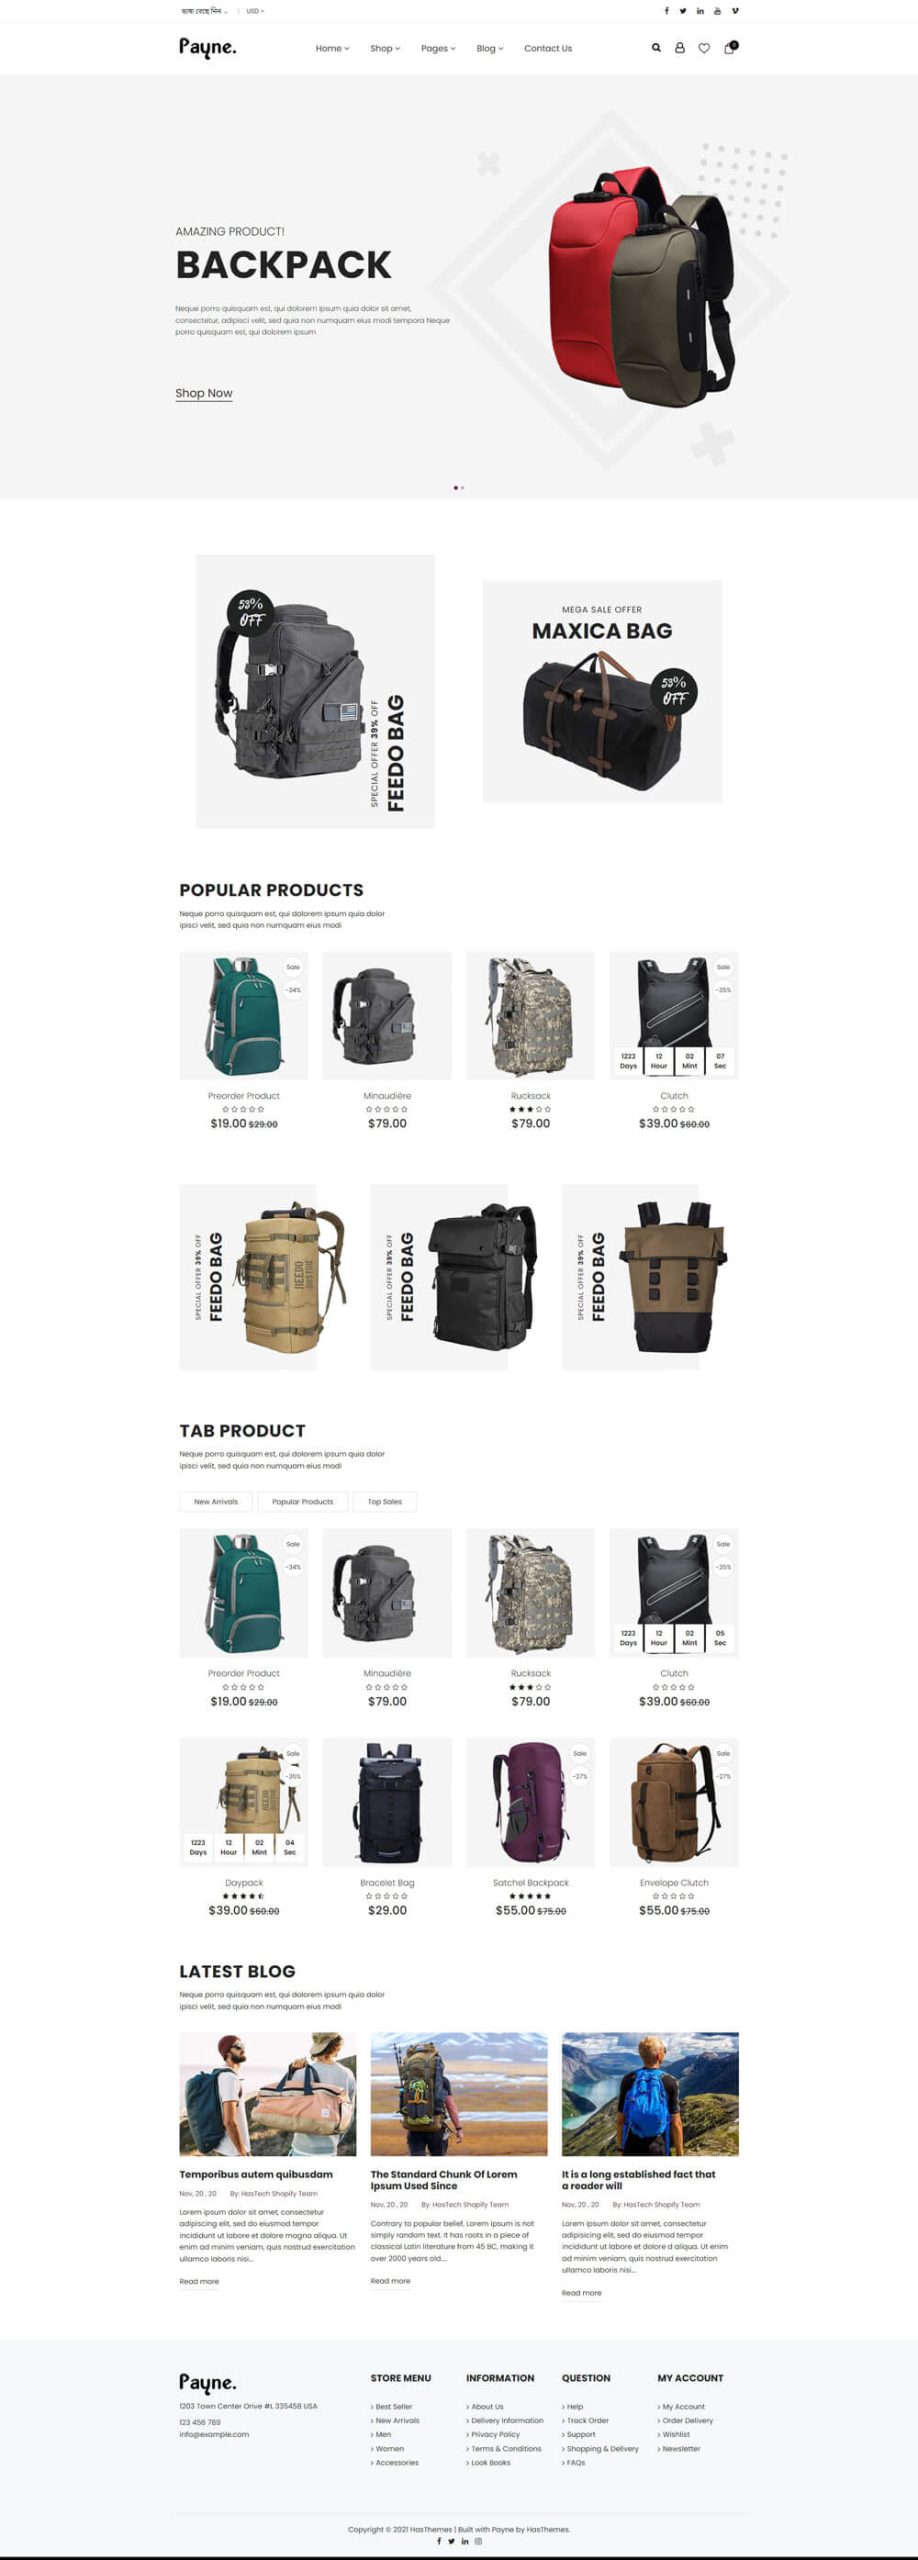 Payne - Backpack e-Commerce Shopify Theme